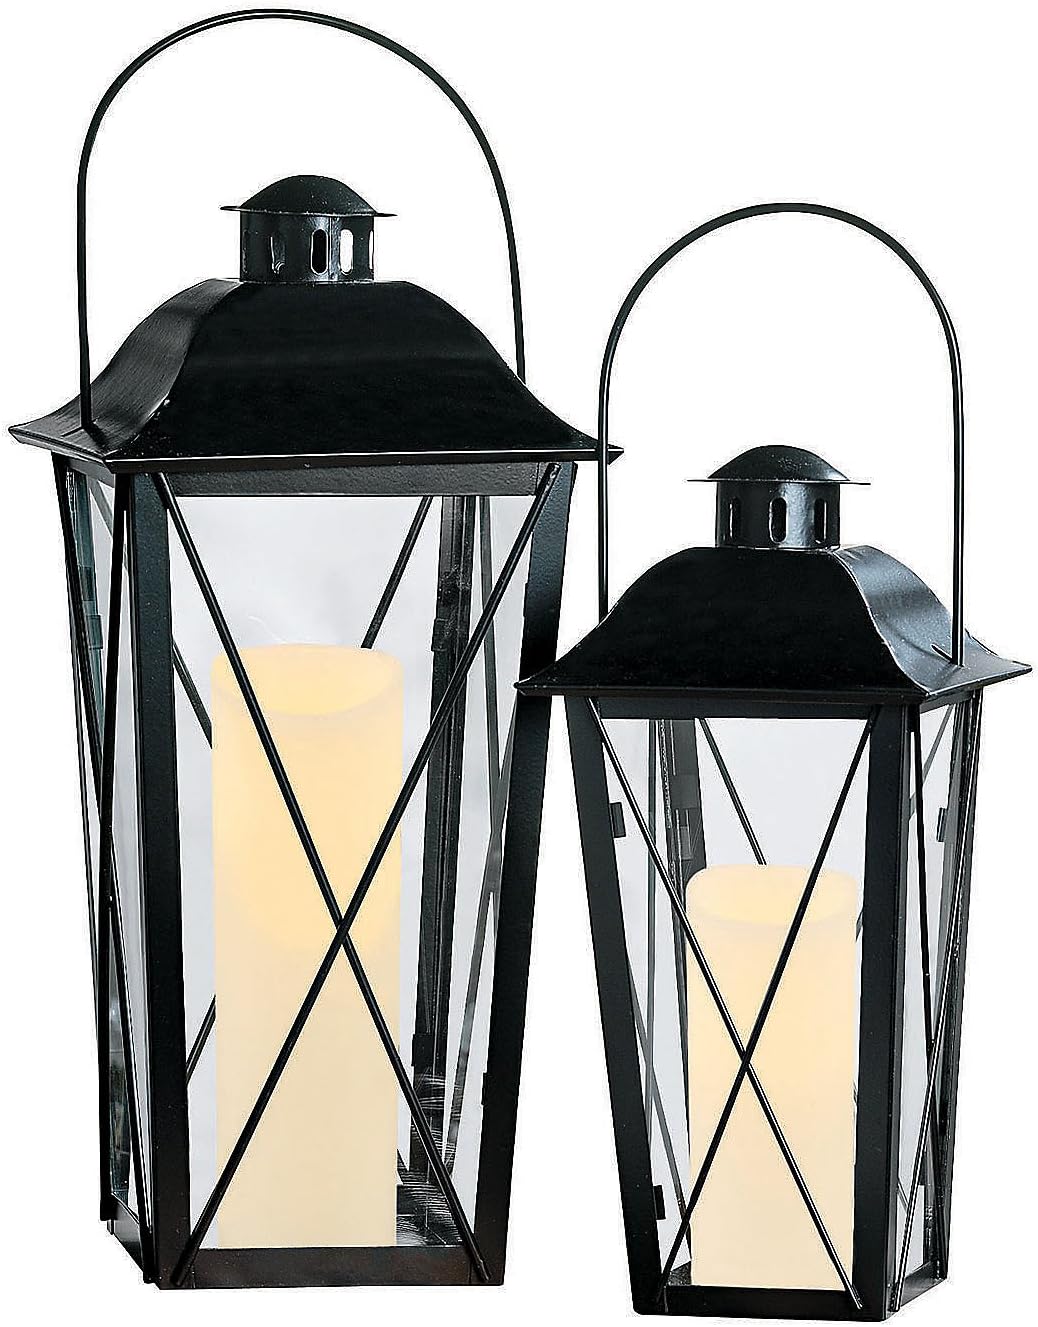 Black Lantern Set (2 Metal Lanterns) Home Decorative Accents